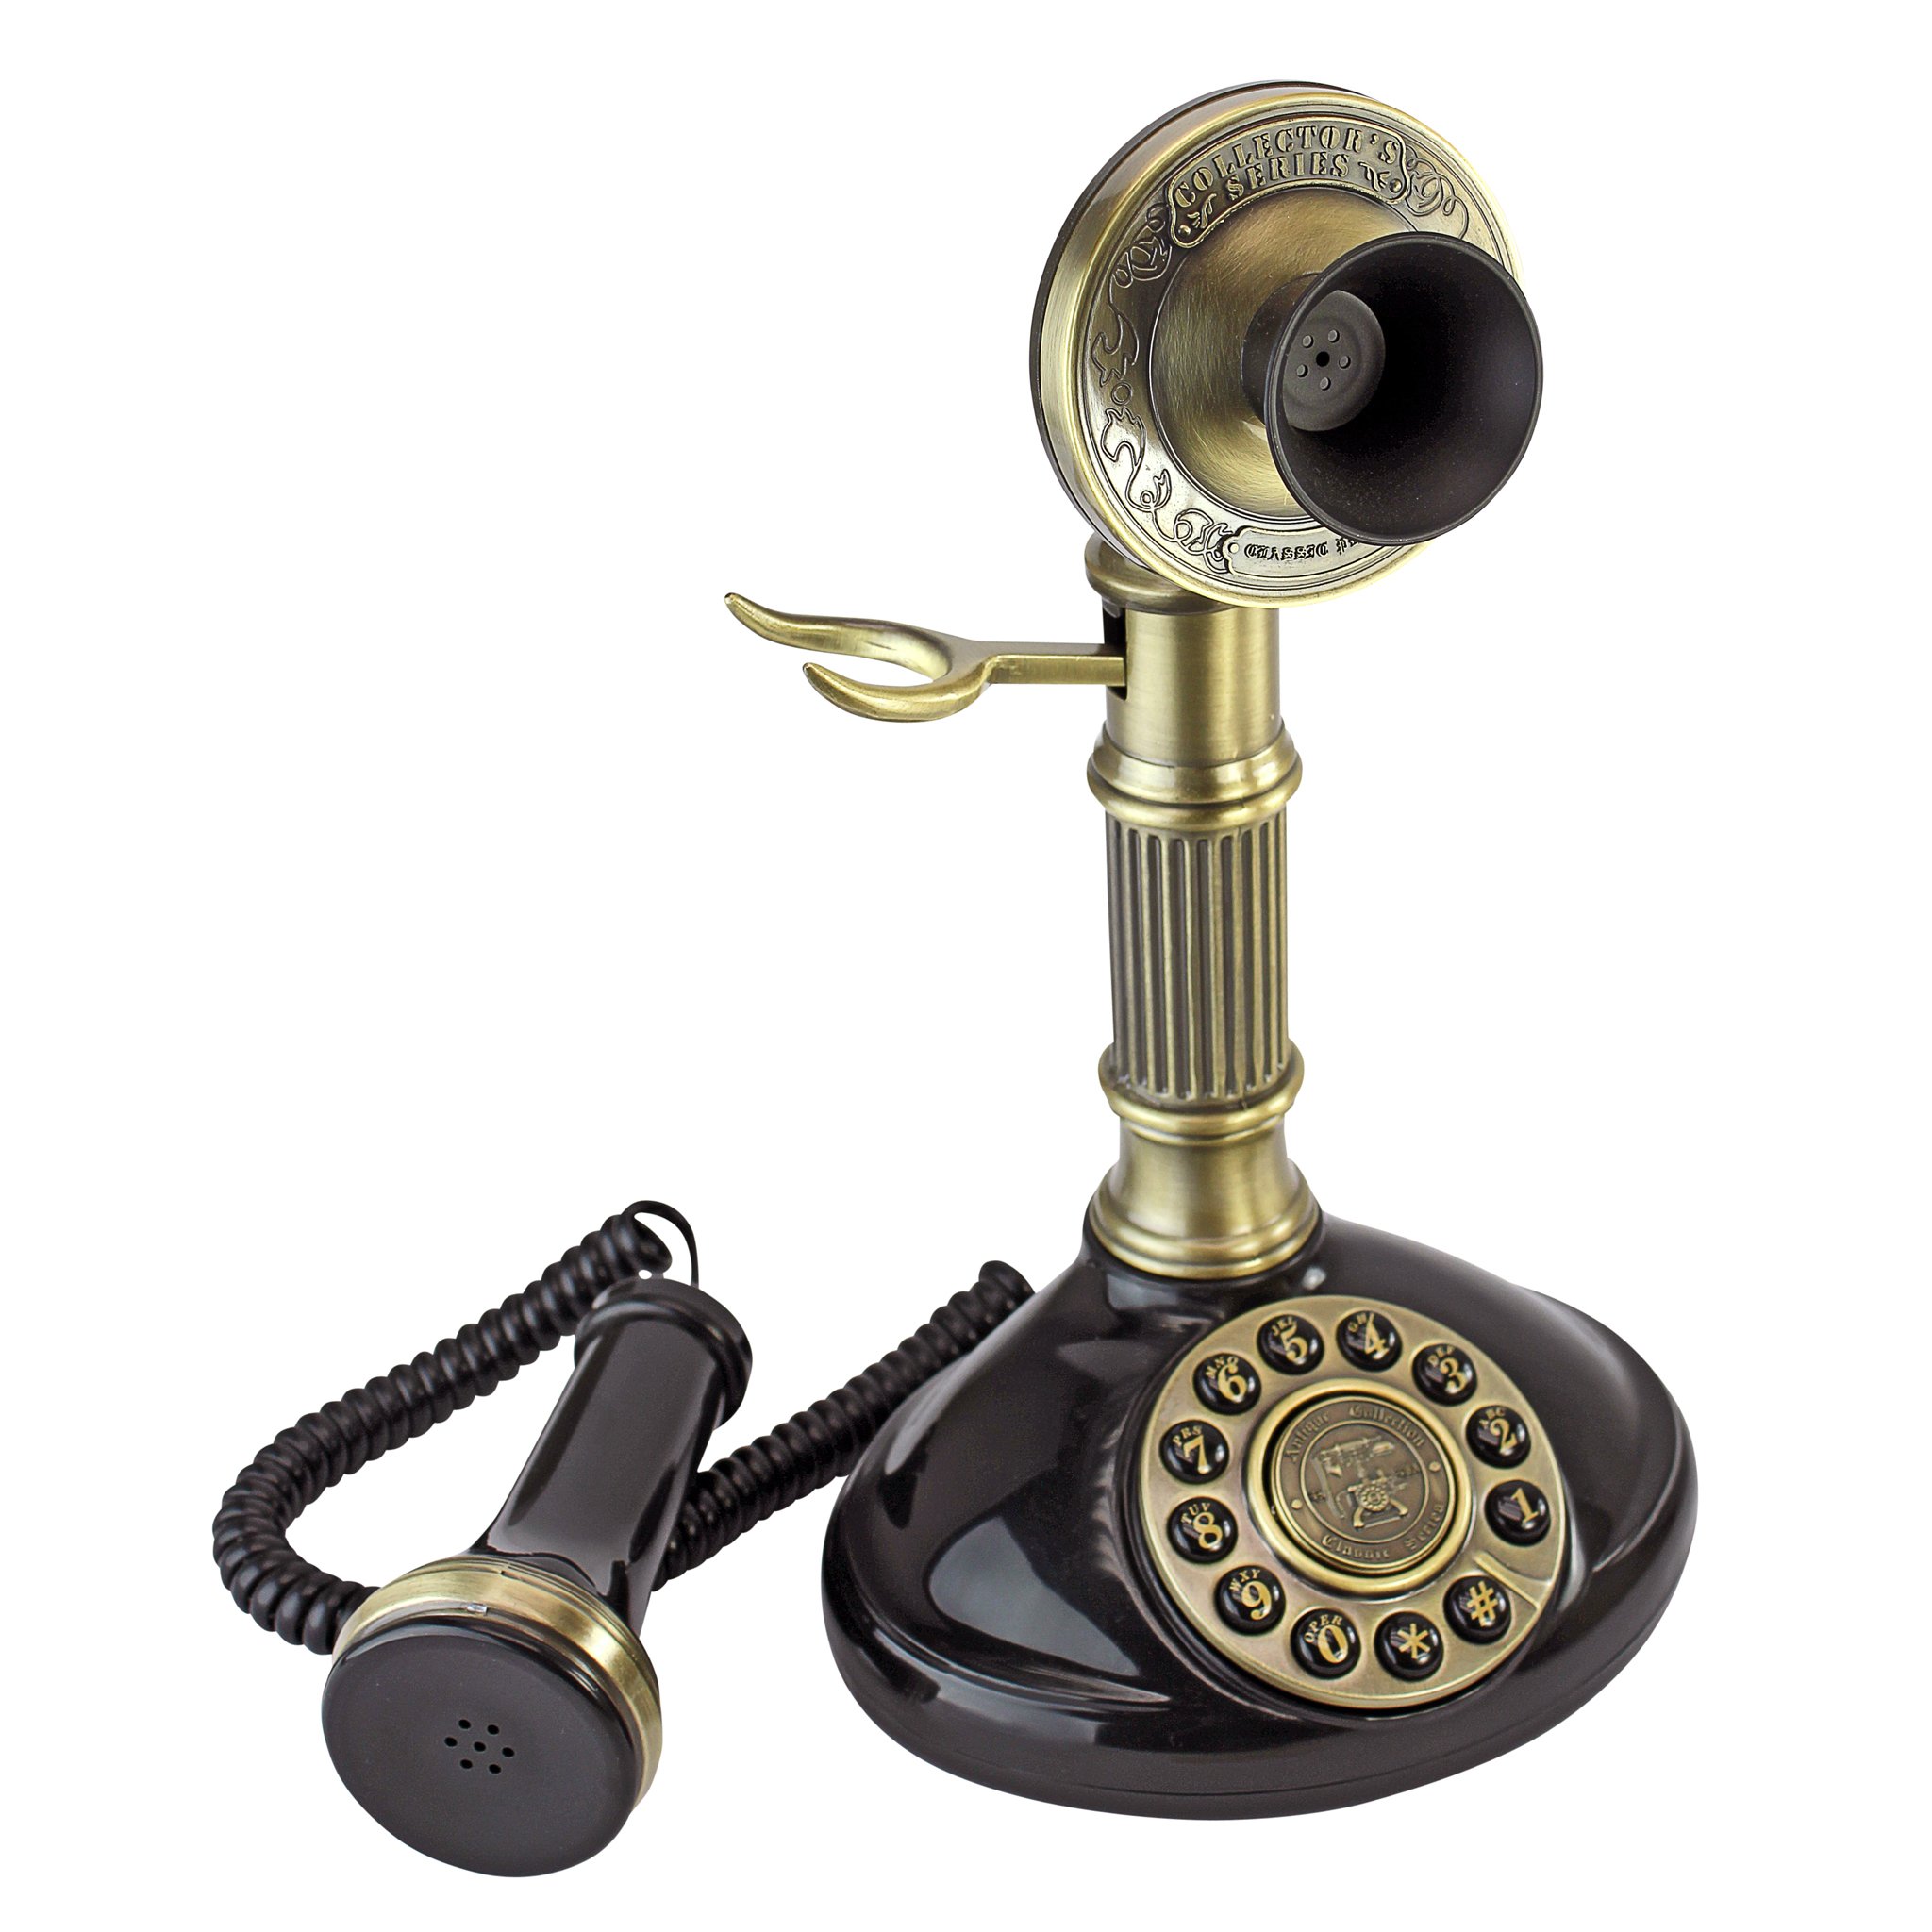 Design Toscano PM1897 Antique Phone - Roman Column 1897 Candlestick Rotary Telephone - Corded Retro Phone - Vintage Decorative Telephones,Black